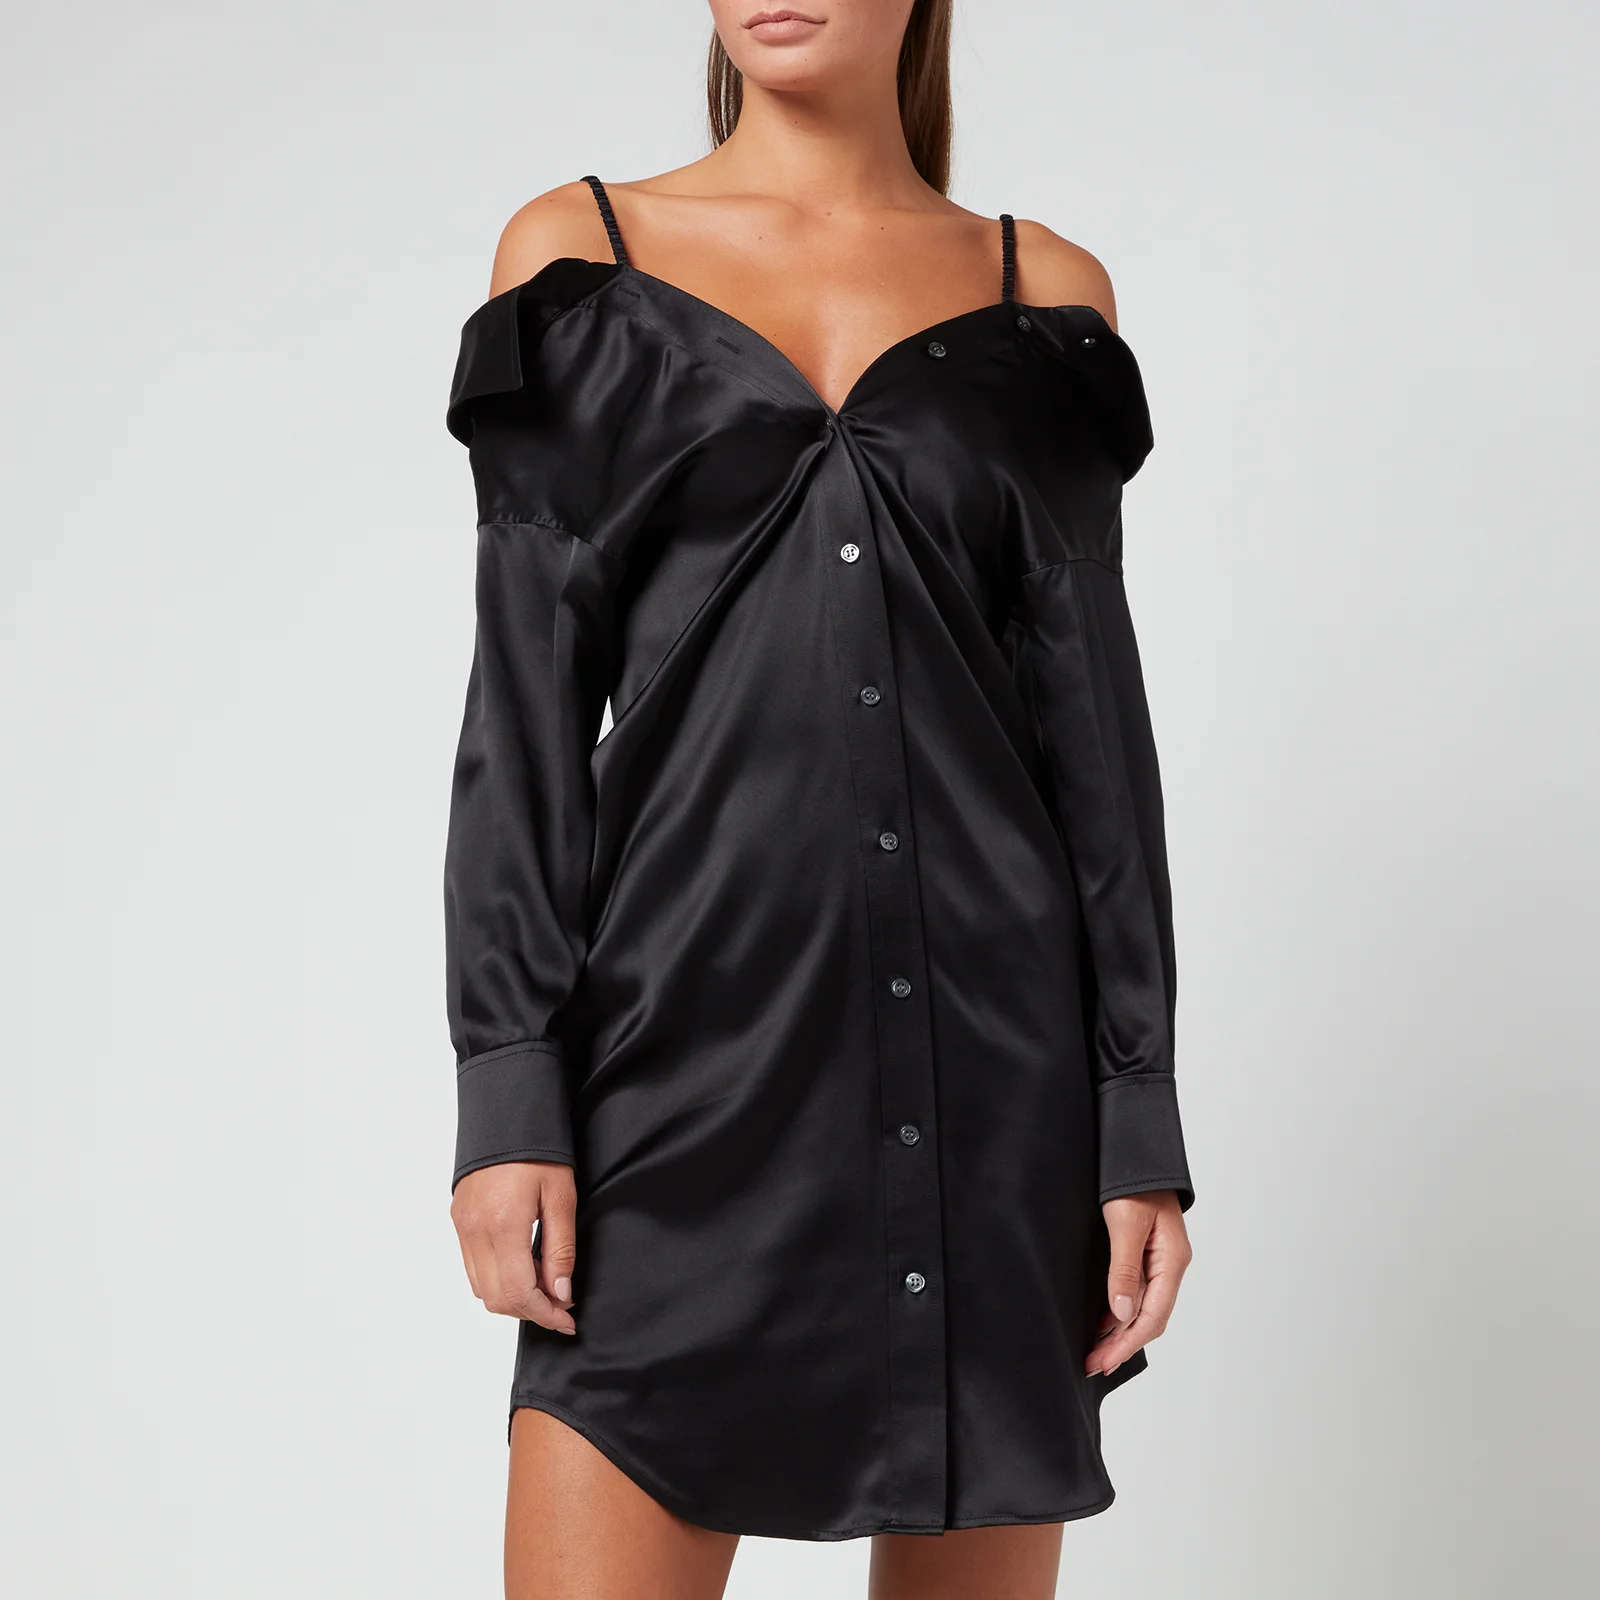 Alexander Wang Women's Off The Shoulder Shirt Dress With Scrunchie Strap - Black Image 1